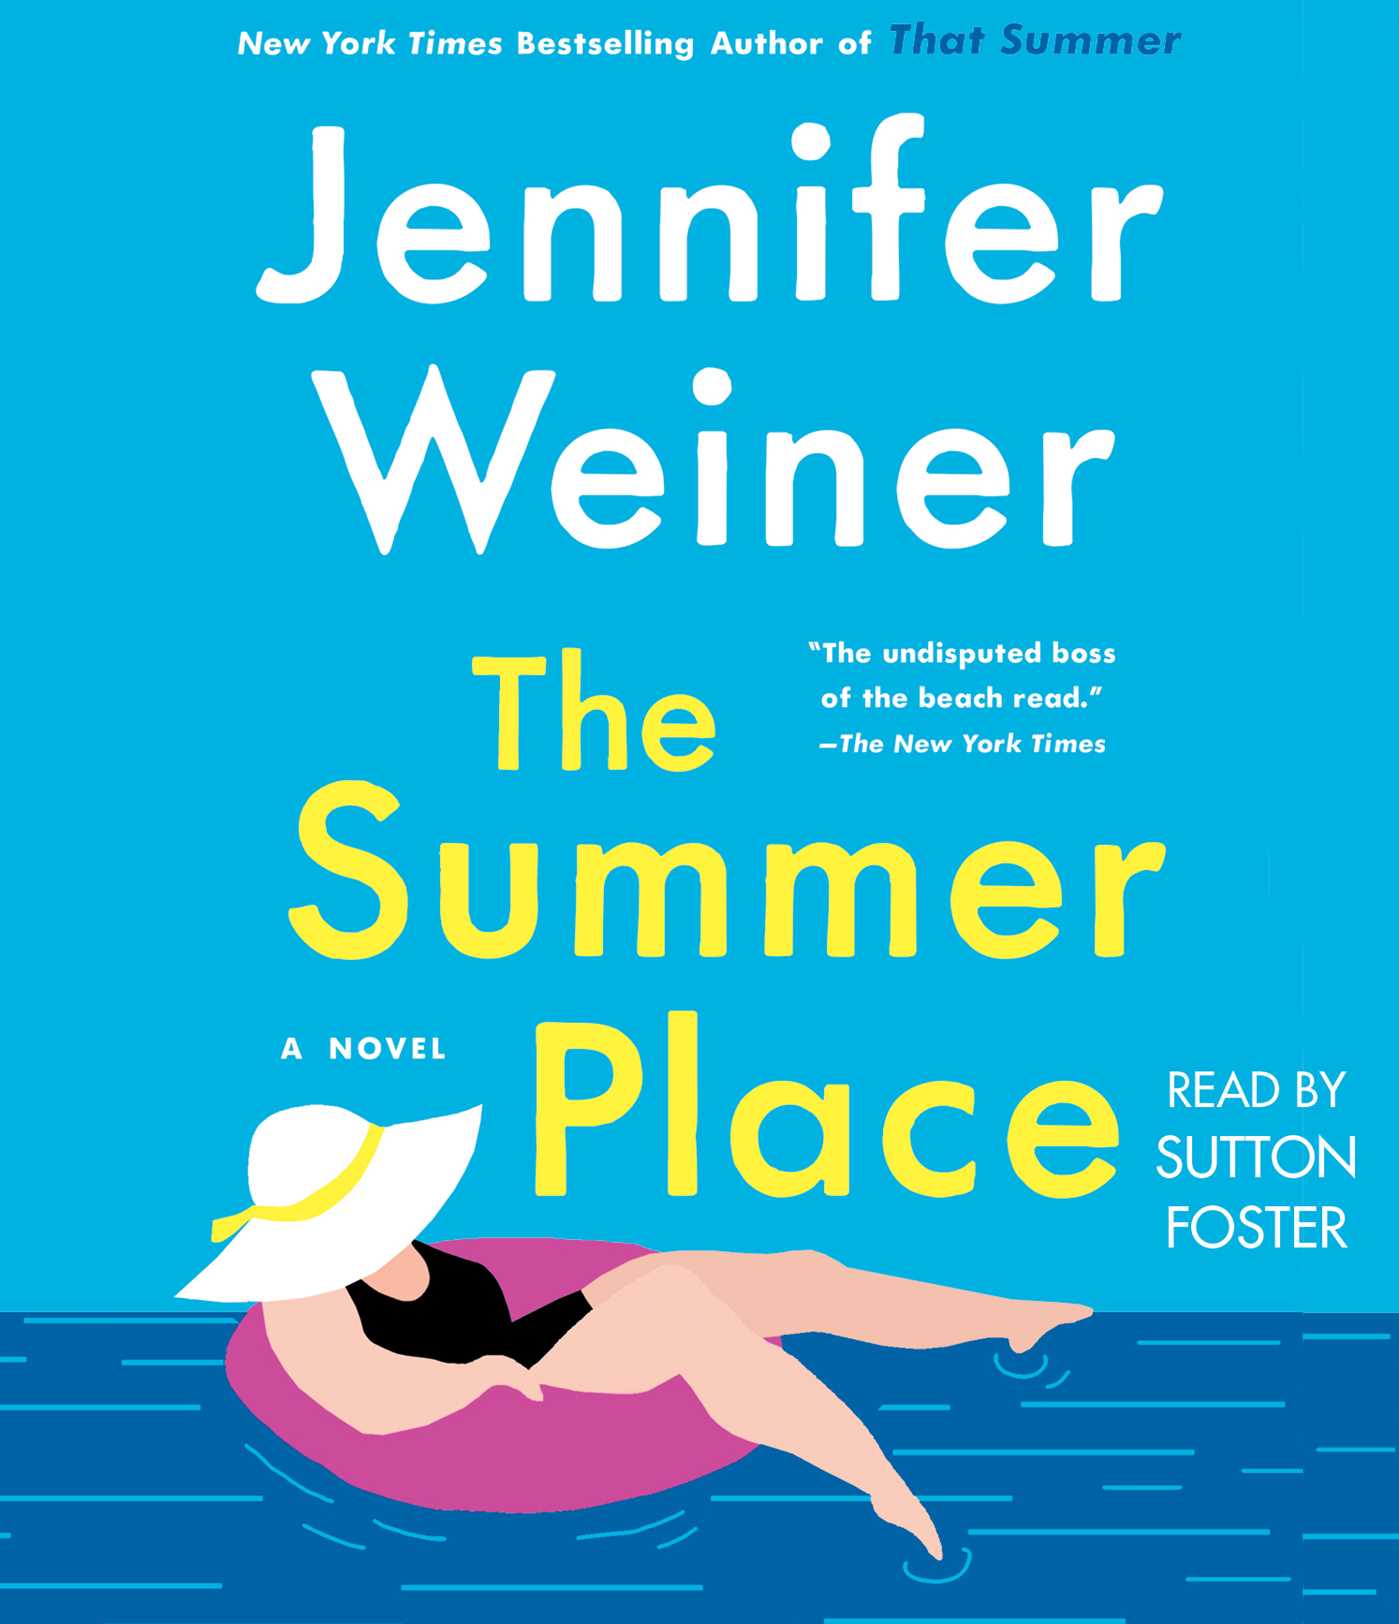 The Summer Place : A Novel